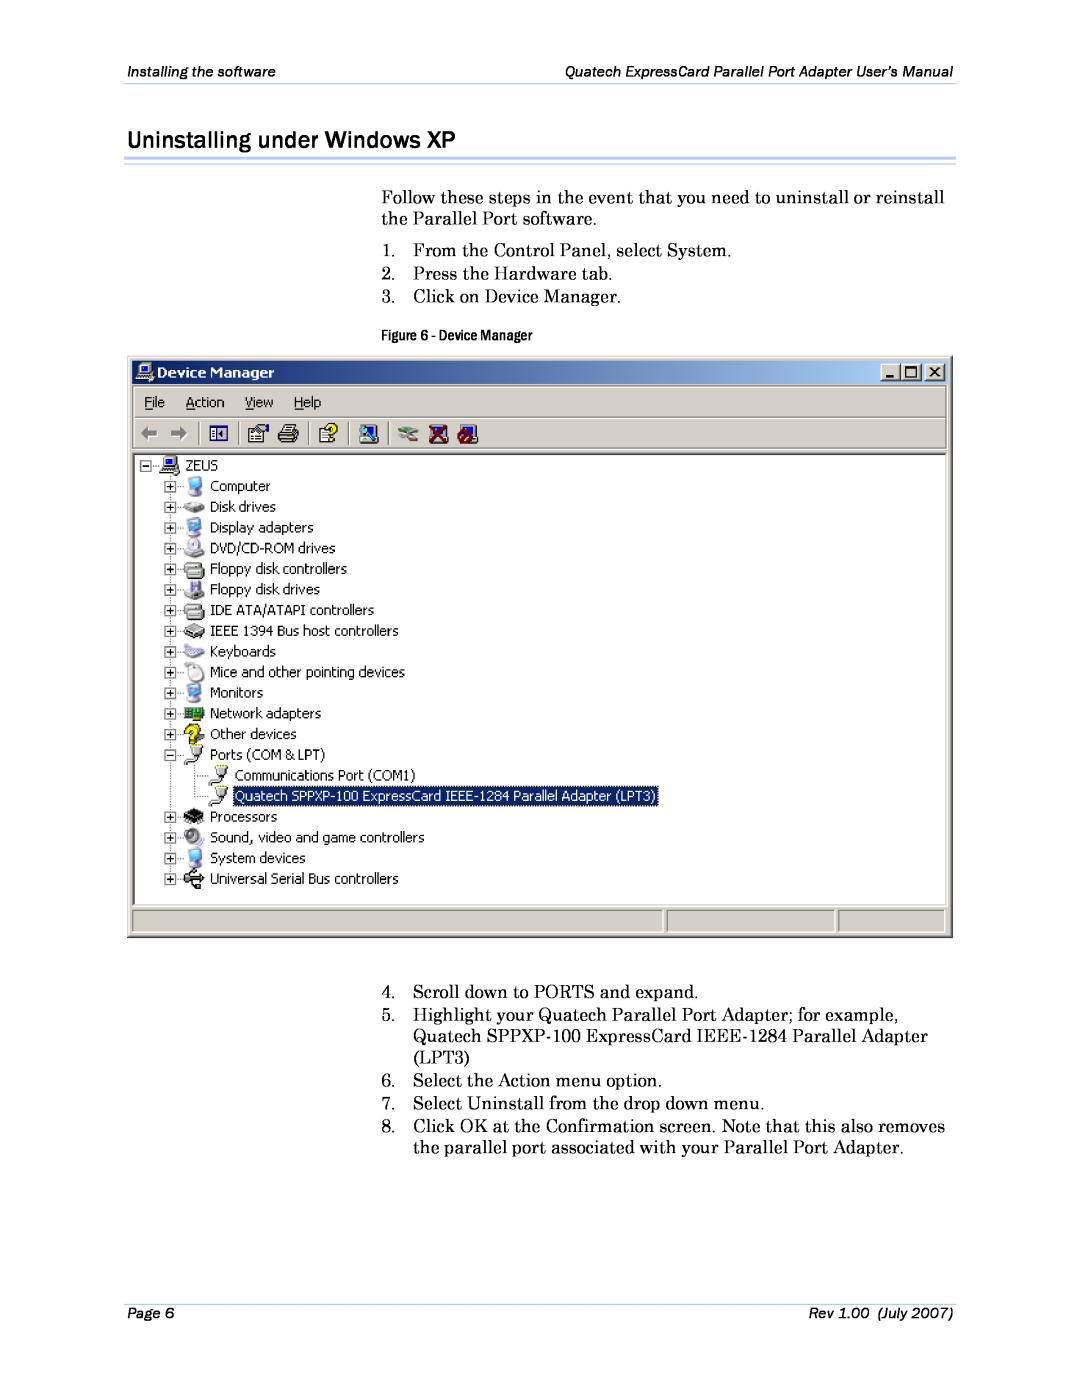 Quatech SPPXP-100 user manual Uninstalling under Windows XP 